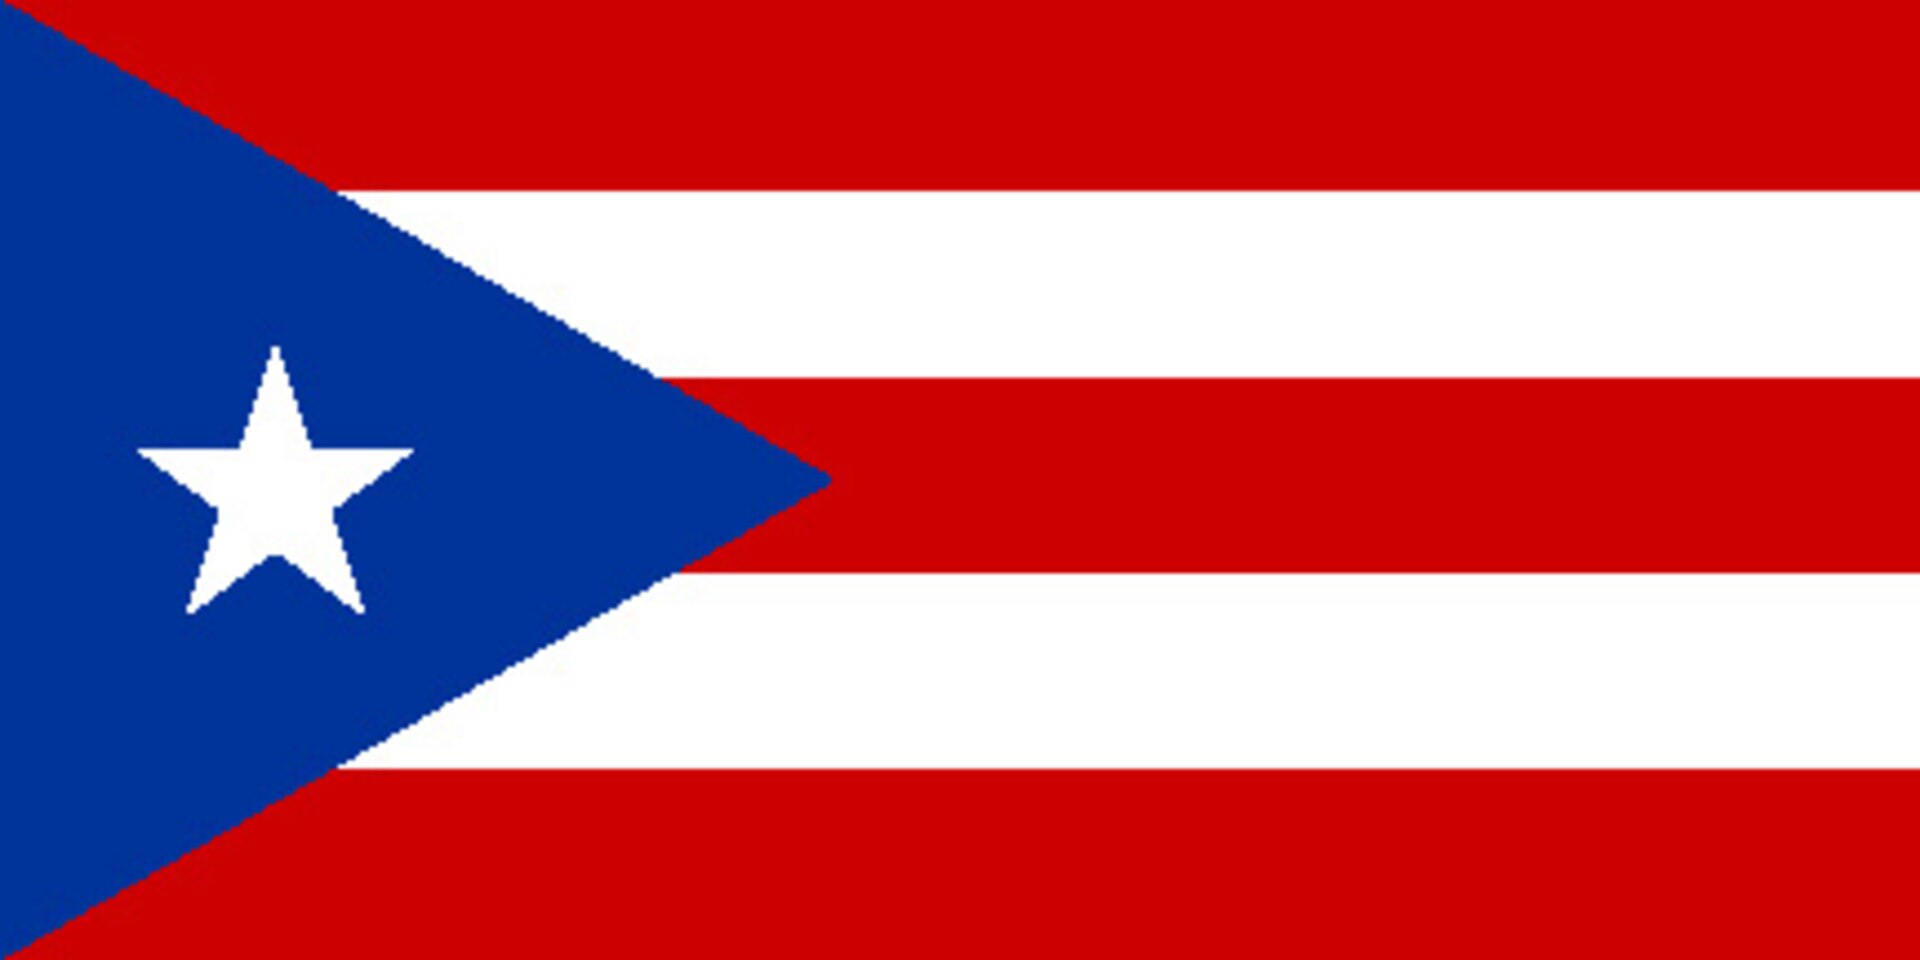 Puerto Rico Flag.